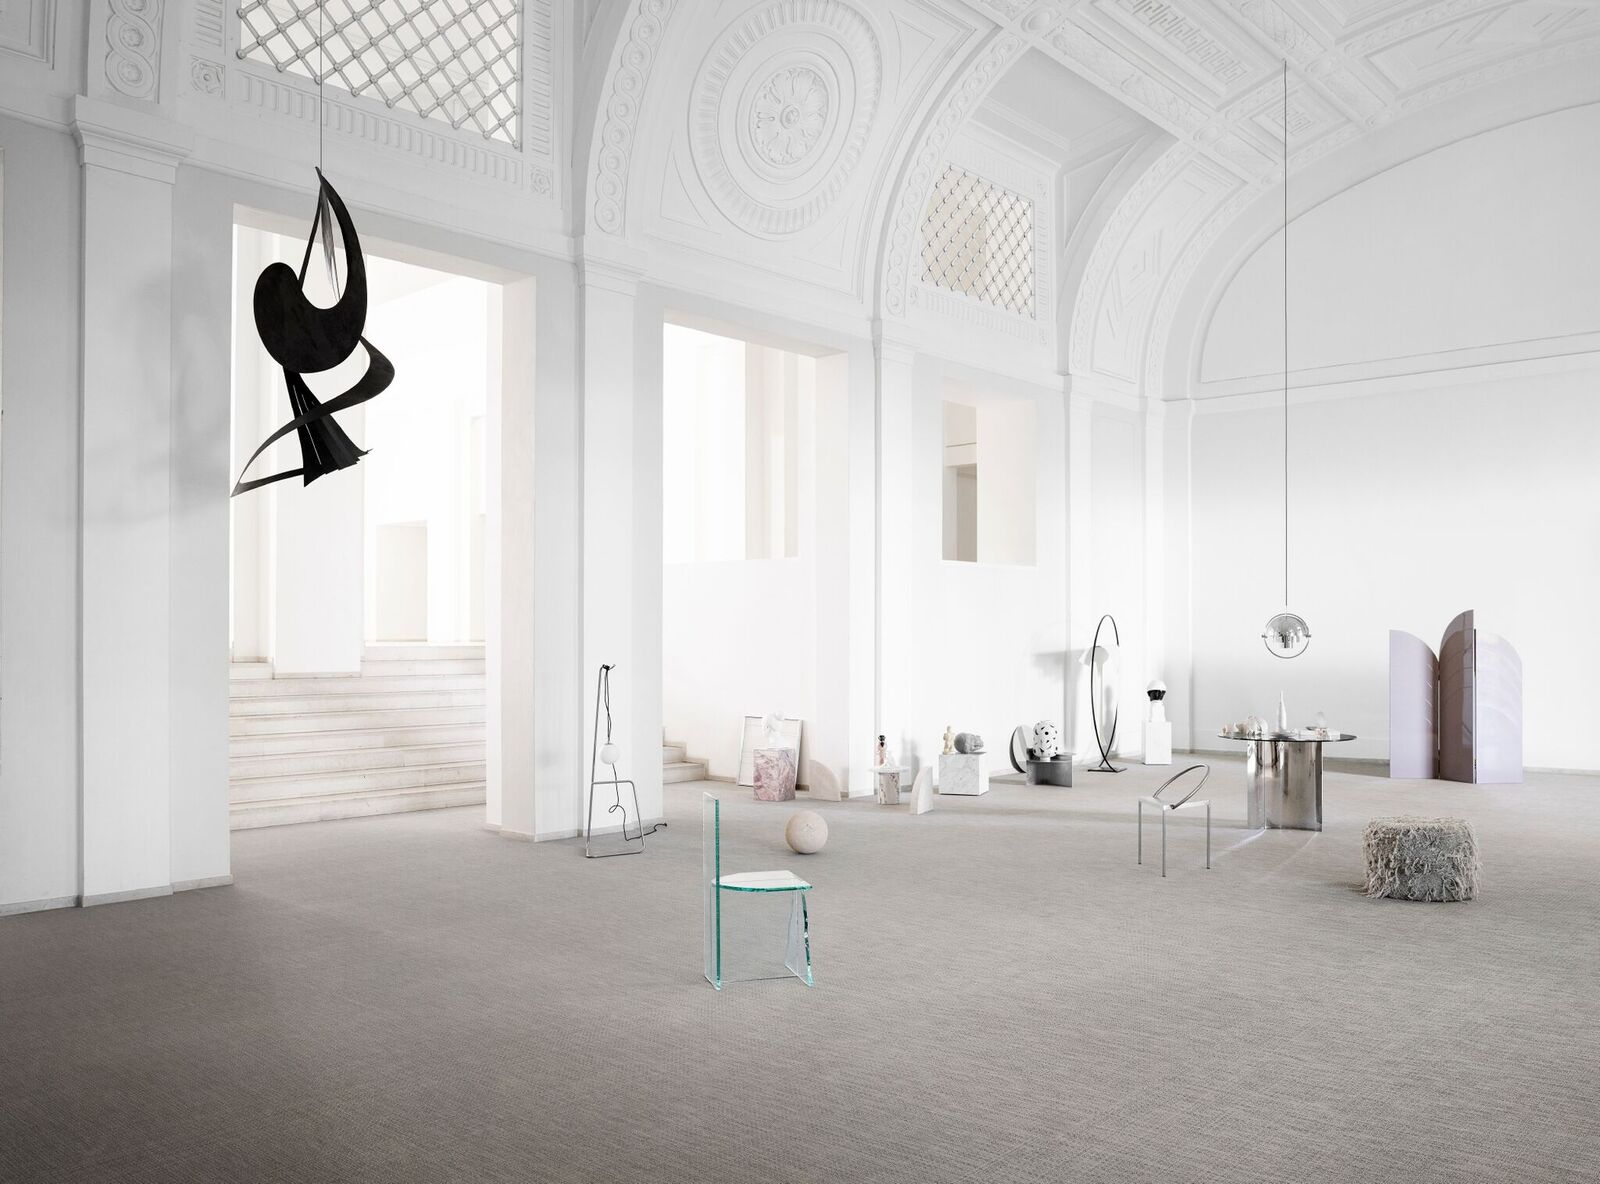 Bolon Elements Collection at designjunction for interior design events blog